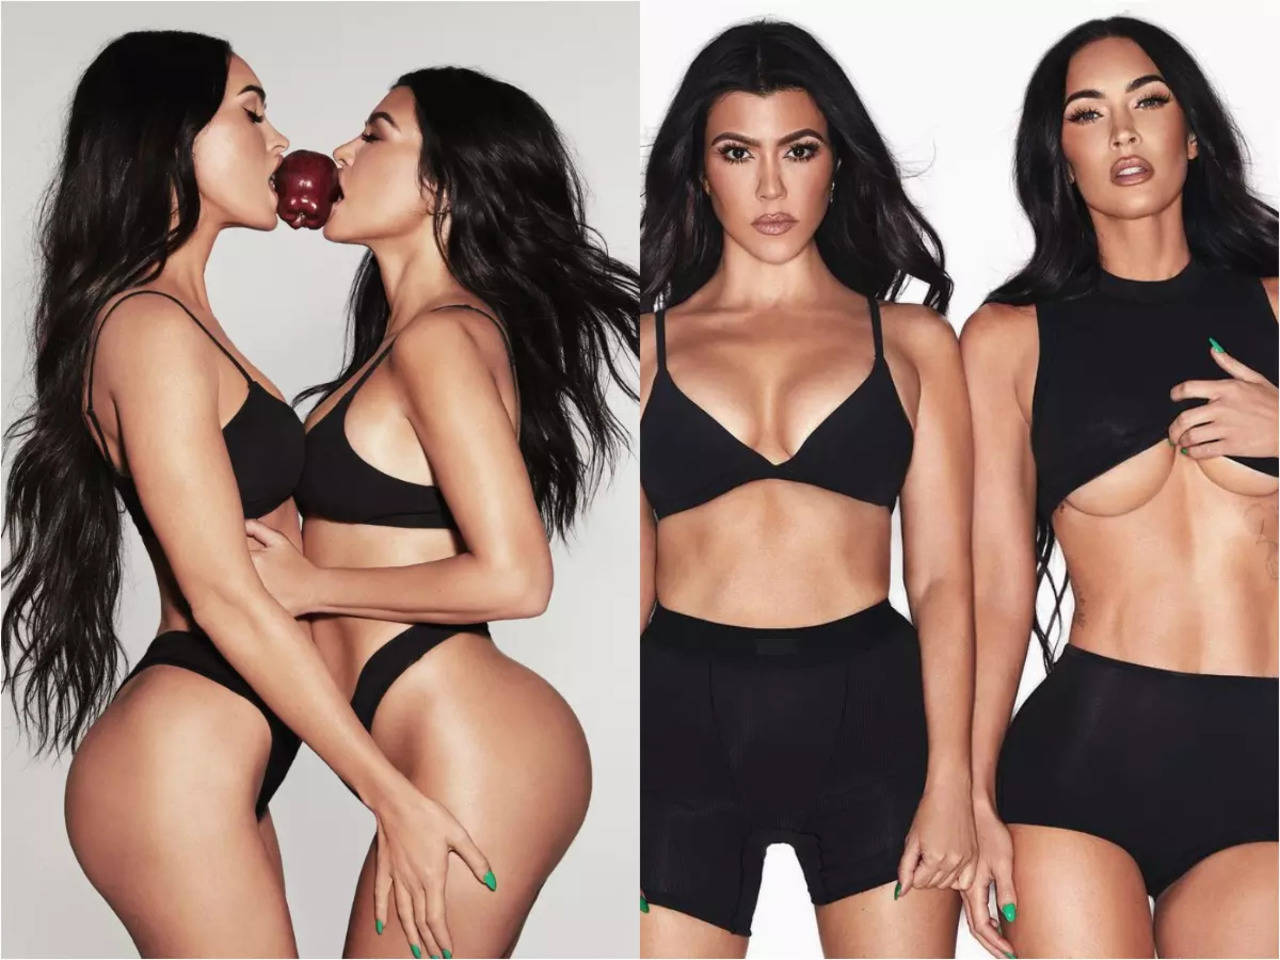 Megan Fox and Kourtney Kardashian strip in a provocative campaign for Kim Kardashian photo